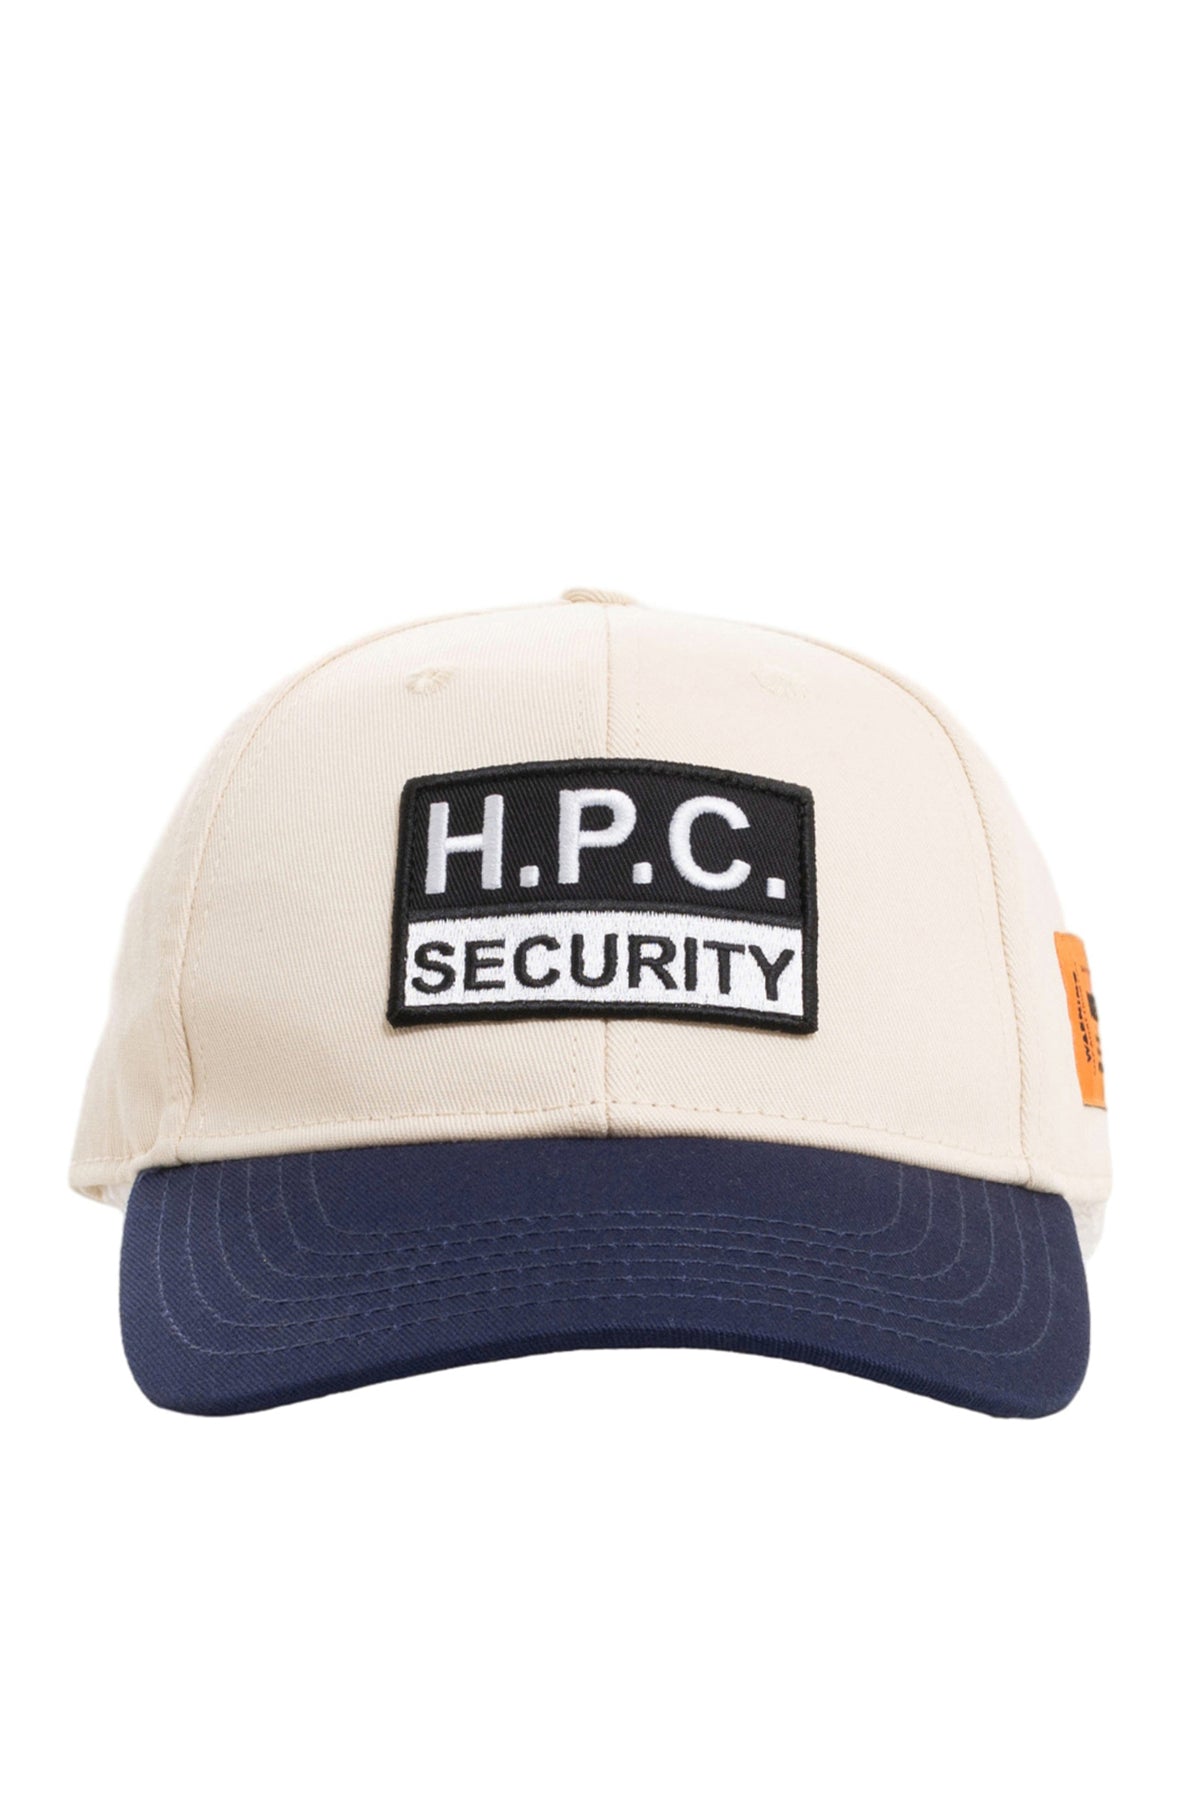 HPC SECURITY HAT / WNT BLU